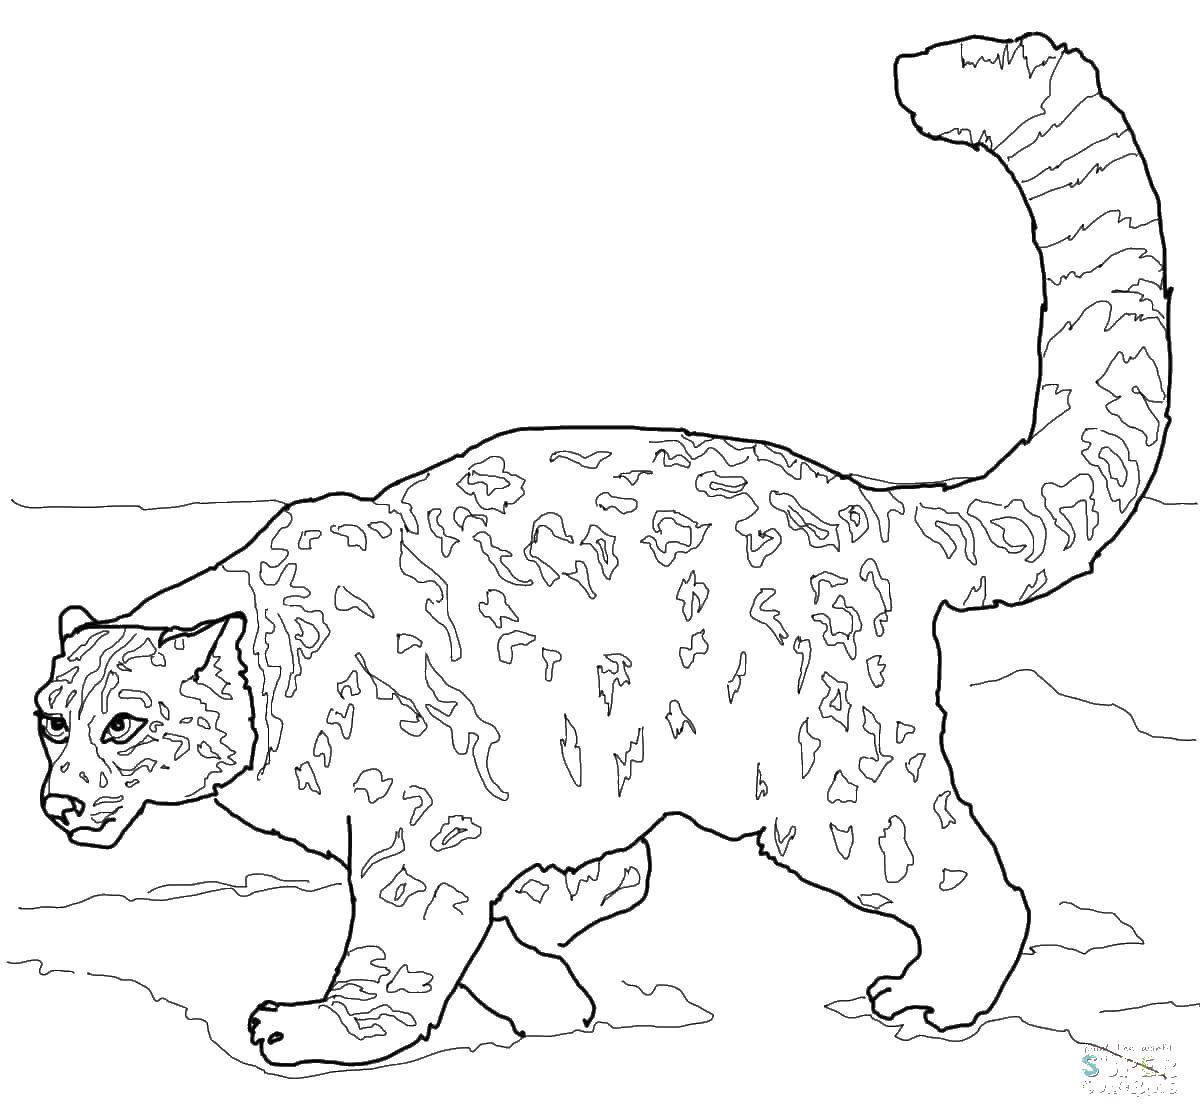 Coloring Cheetah has a fluffy tail. Category Animals. Tags:  animals, cheetahs, cats.